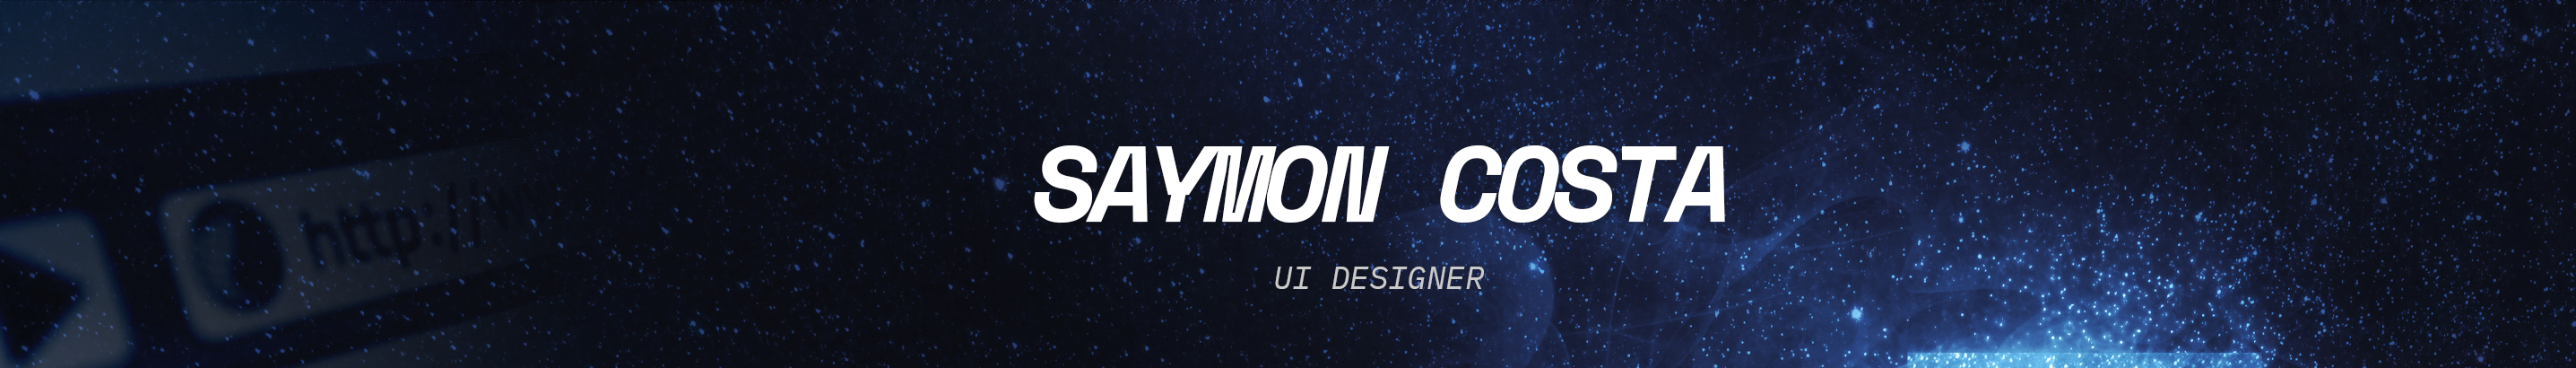 Saymon Costa's profile banner